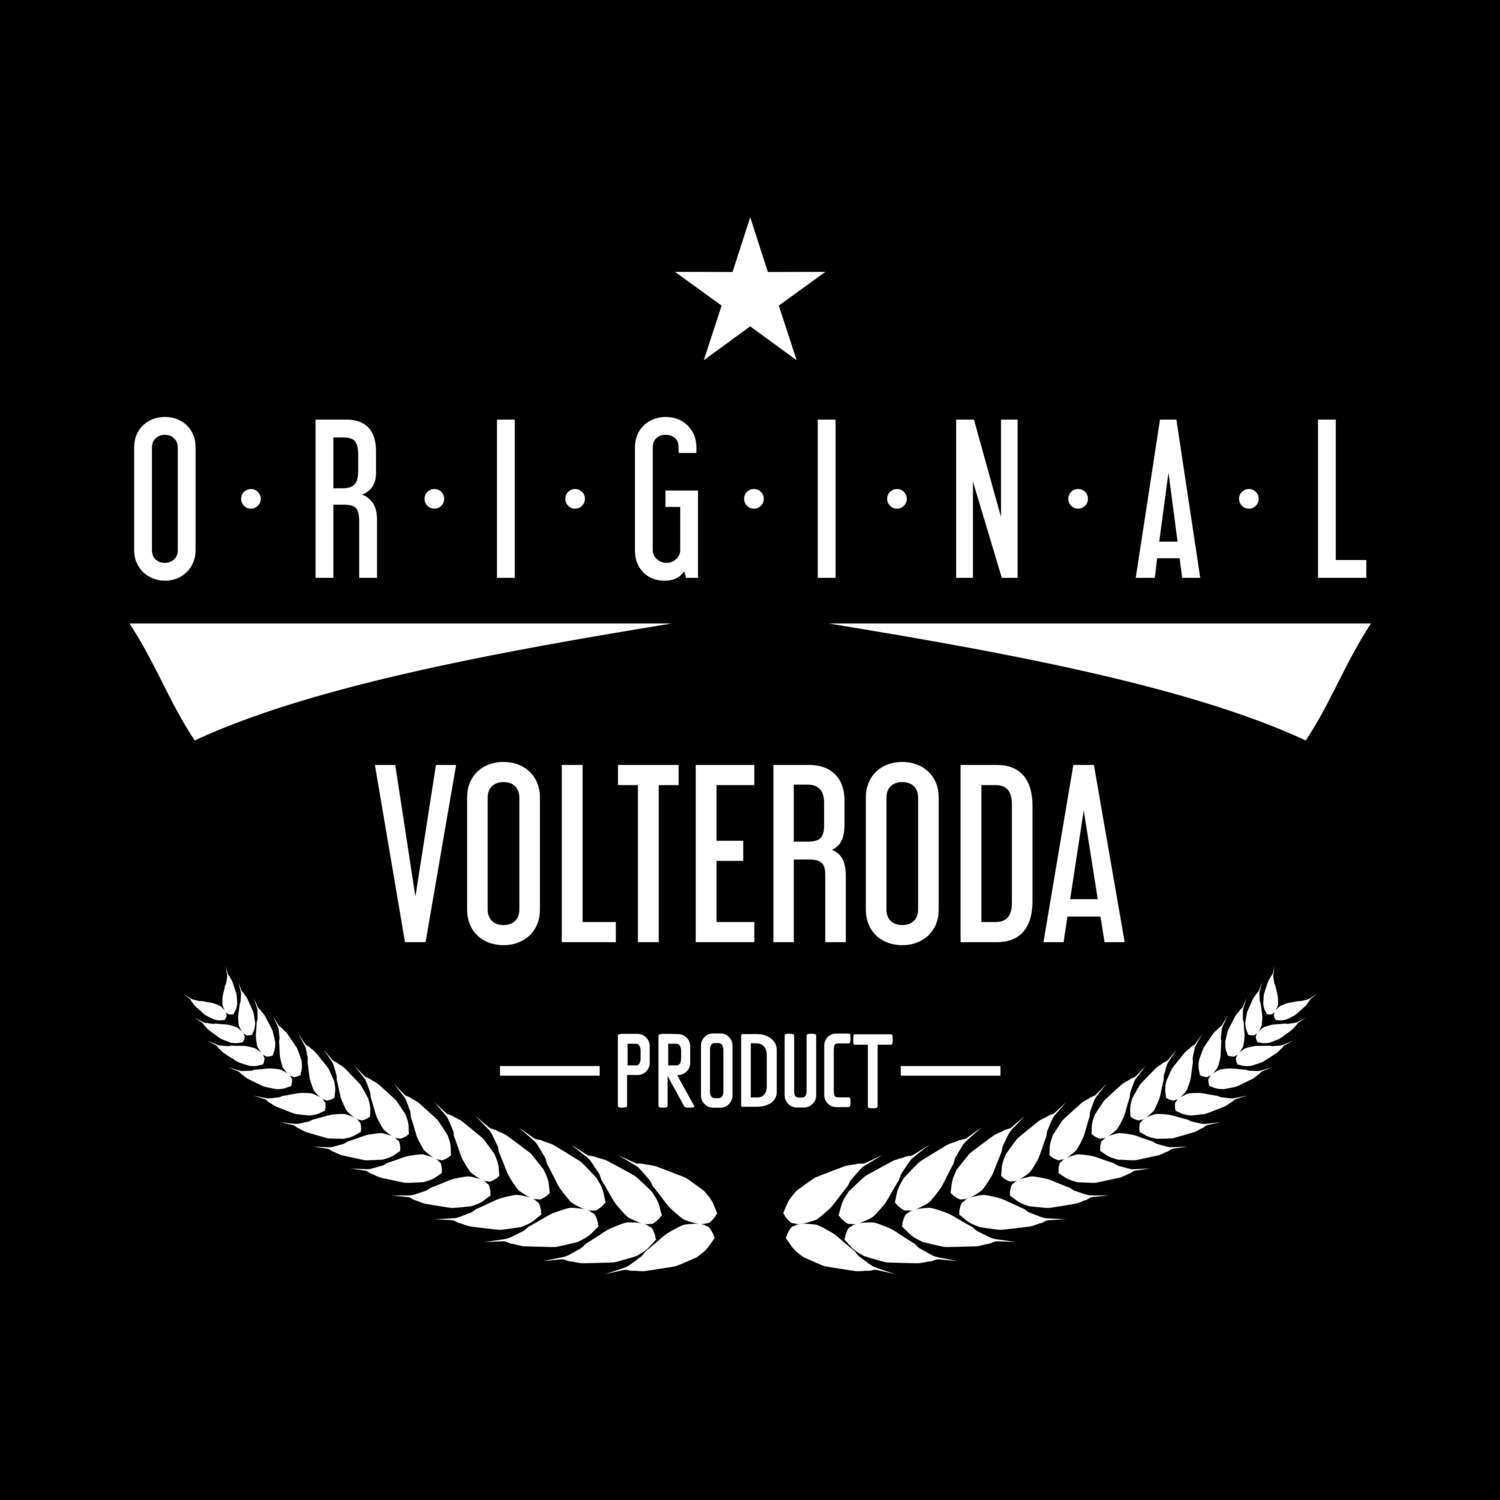 Volteroda T-Shirt »Original Product«